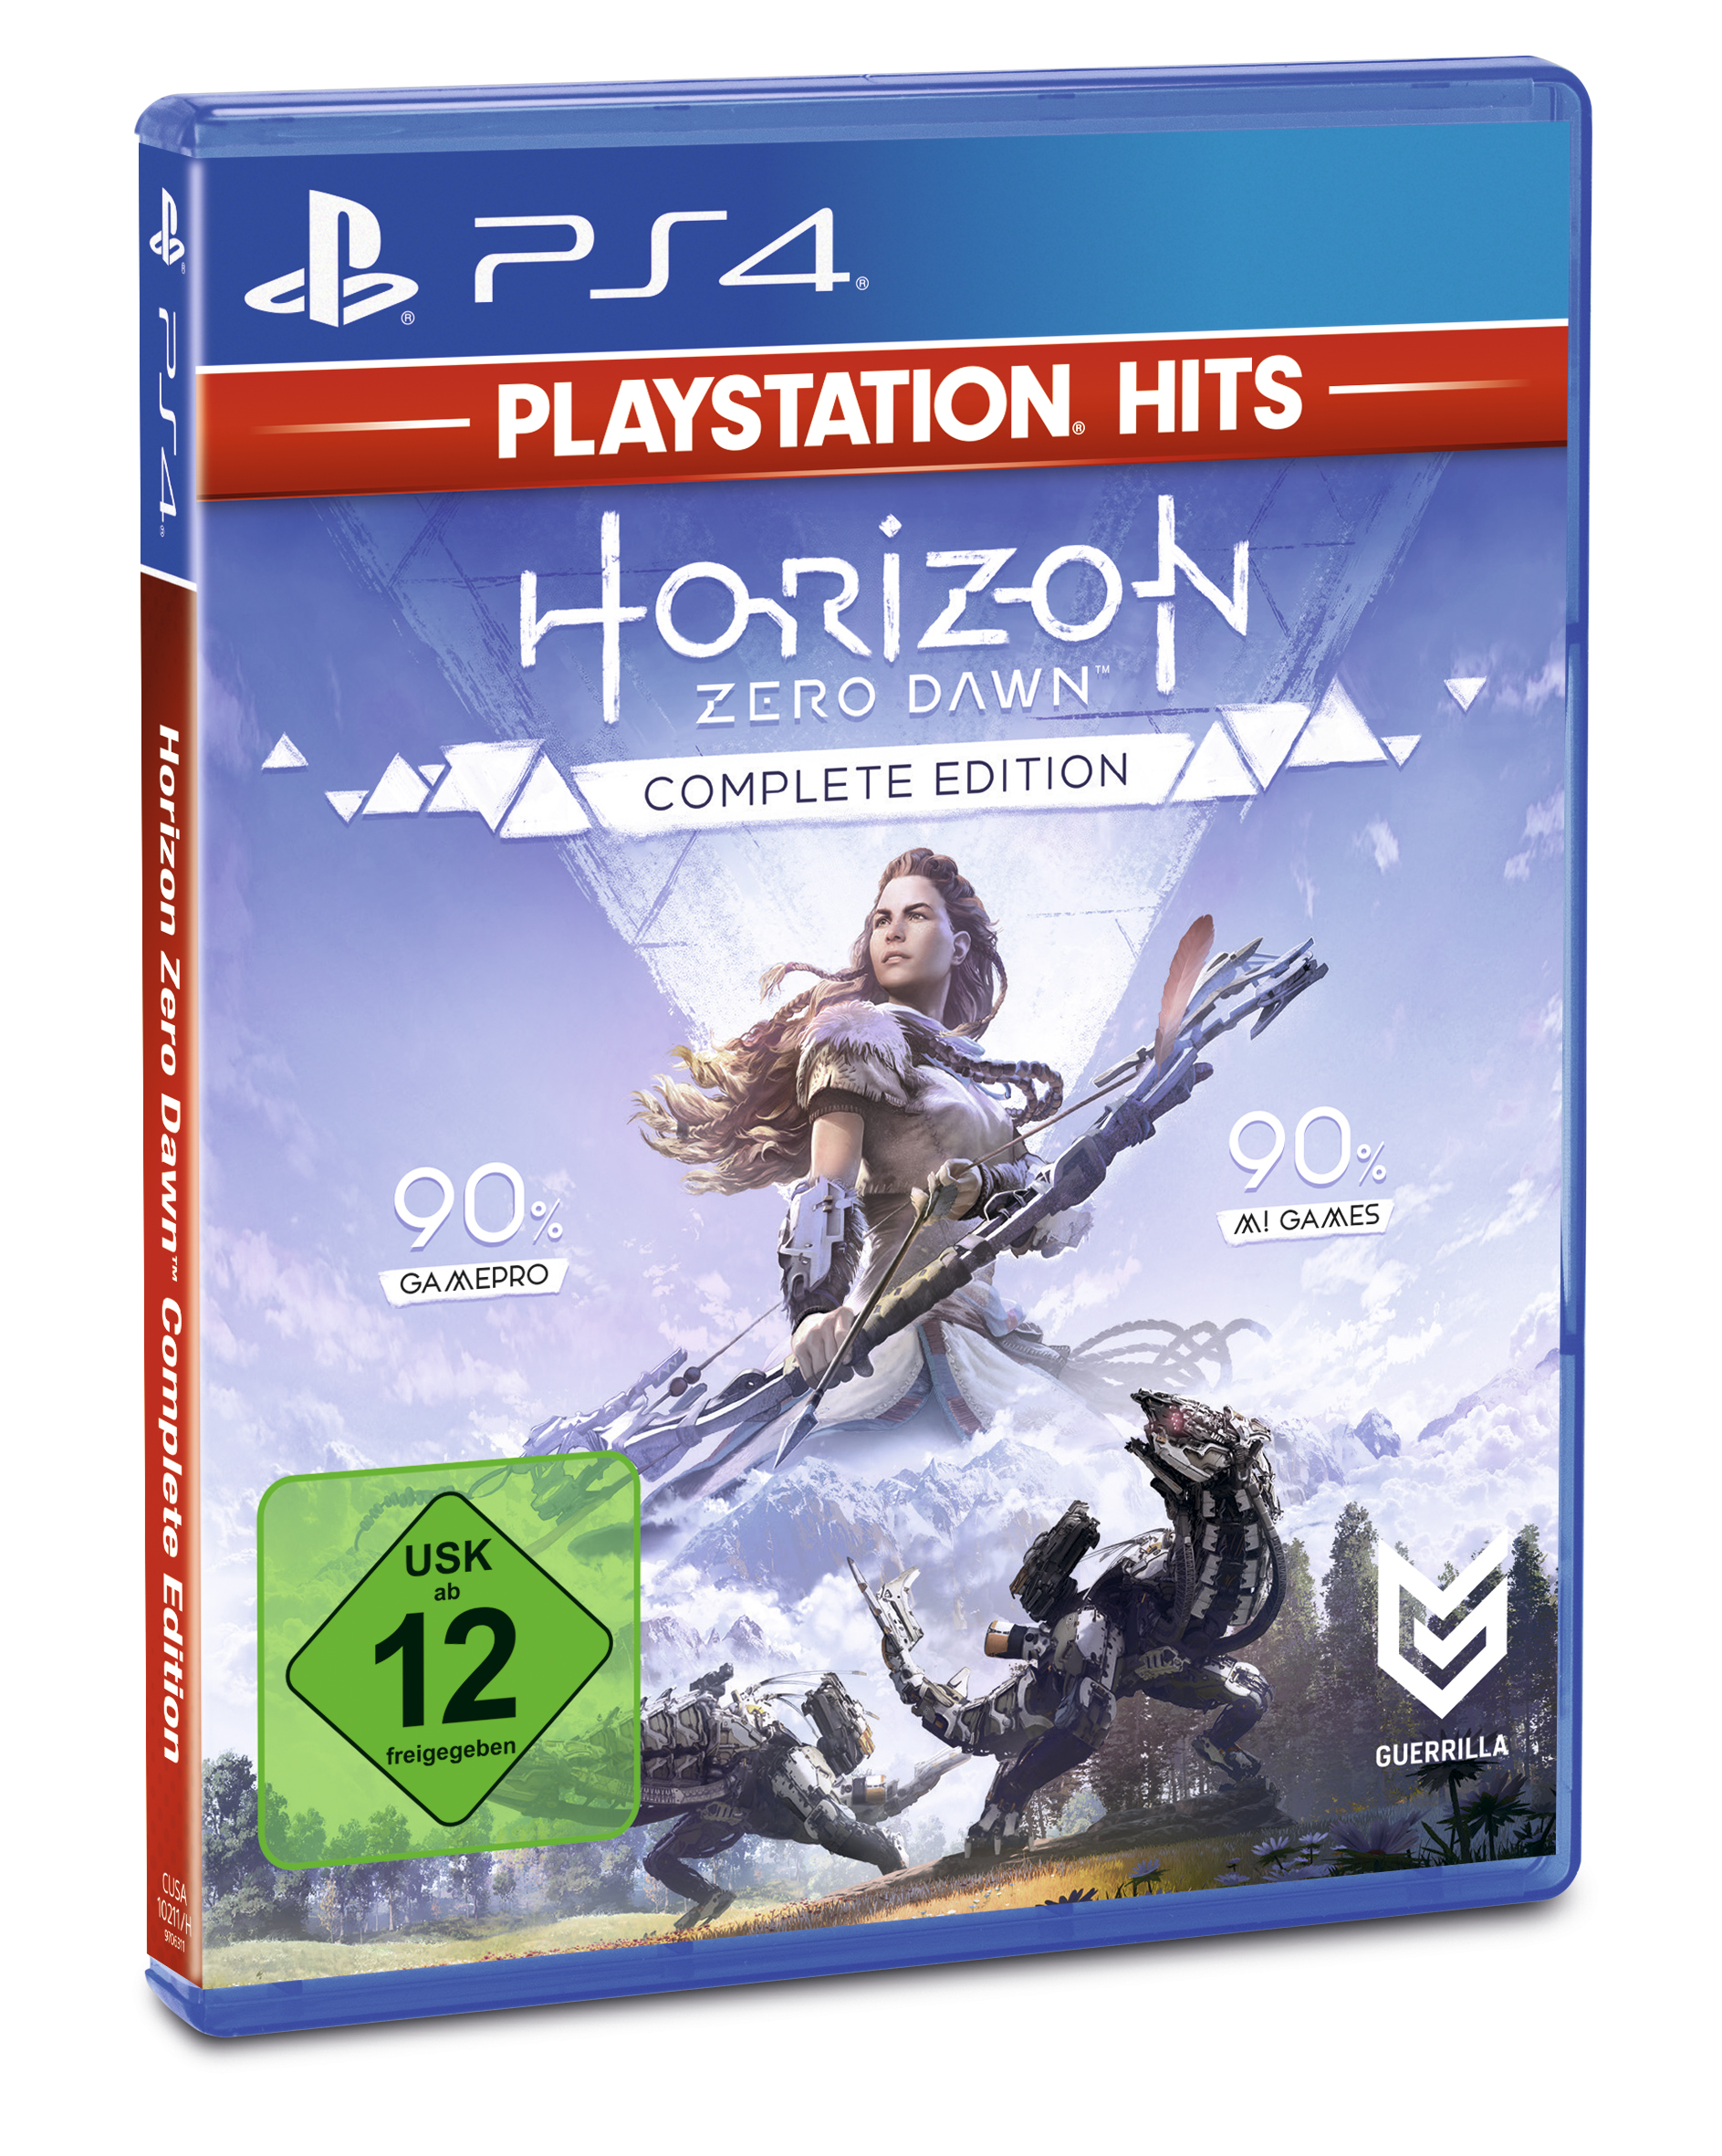 PlayStation Hits: Horizon Zero Dawn Complete 4] Edition - [PlayStation